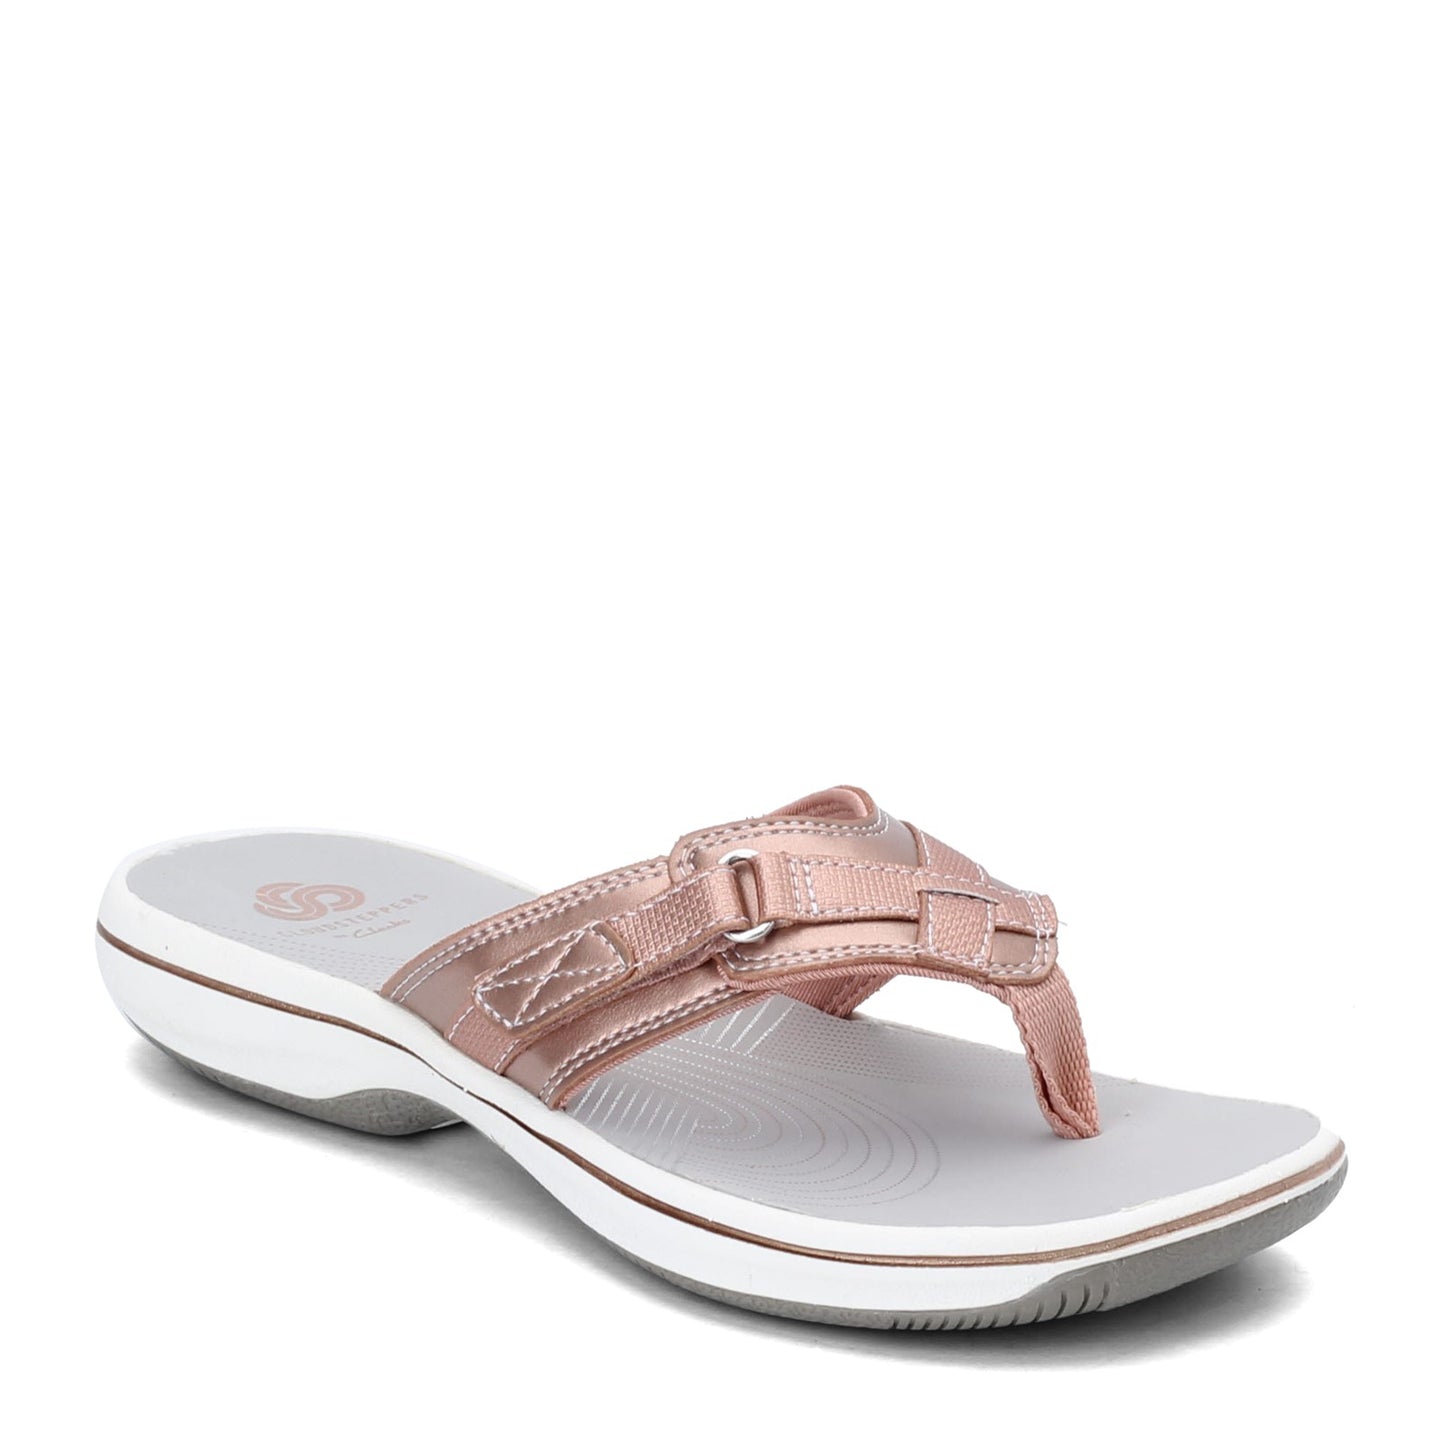 Peltz Shoes  Women's Clarks Breeze Sea Sandal ROSE GOLD 26142608